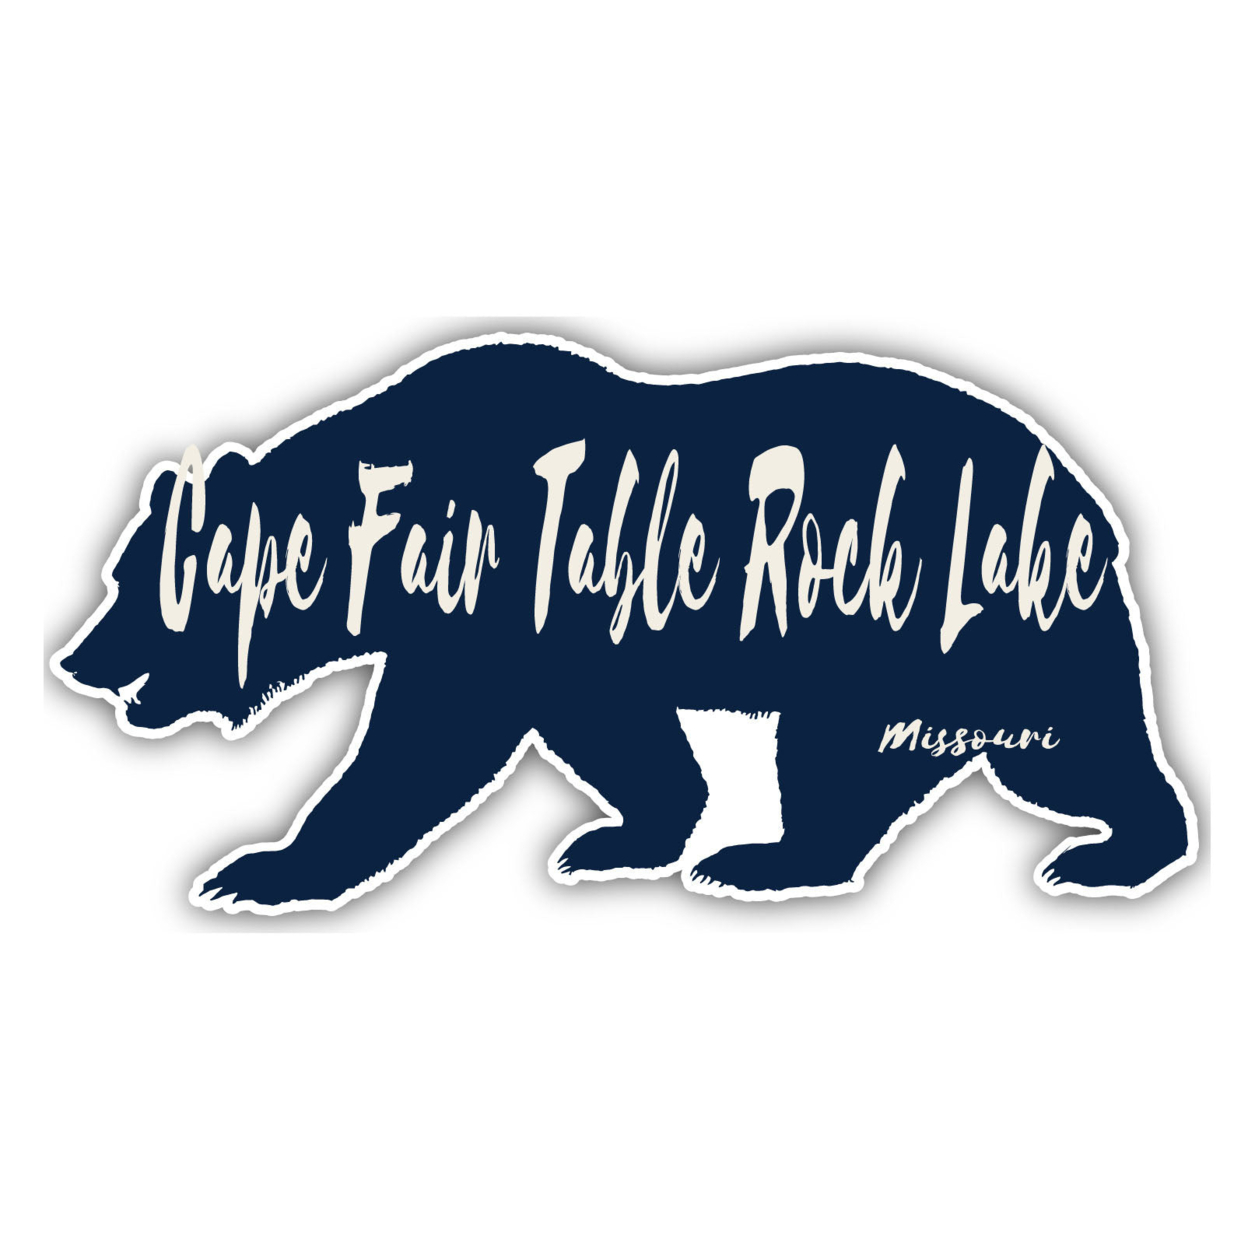 Cape Fair Table Rock Lake Missouri Souvenir Decorative Stickers (Choose Theme And Size) - Single Unit, 10-Inch, Bear